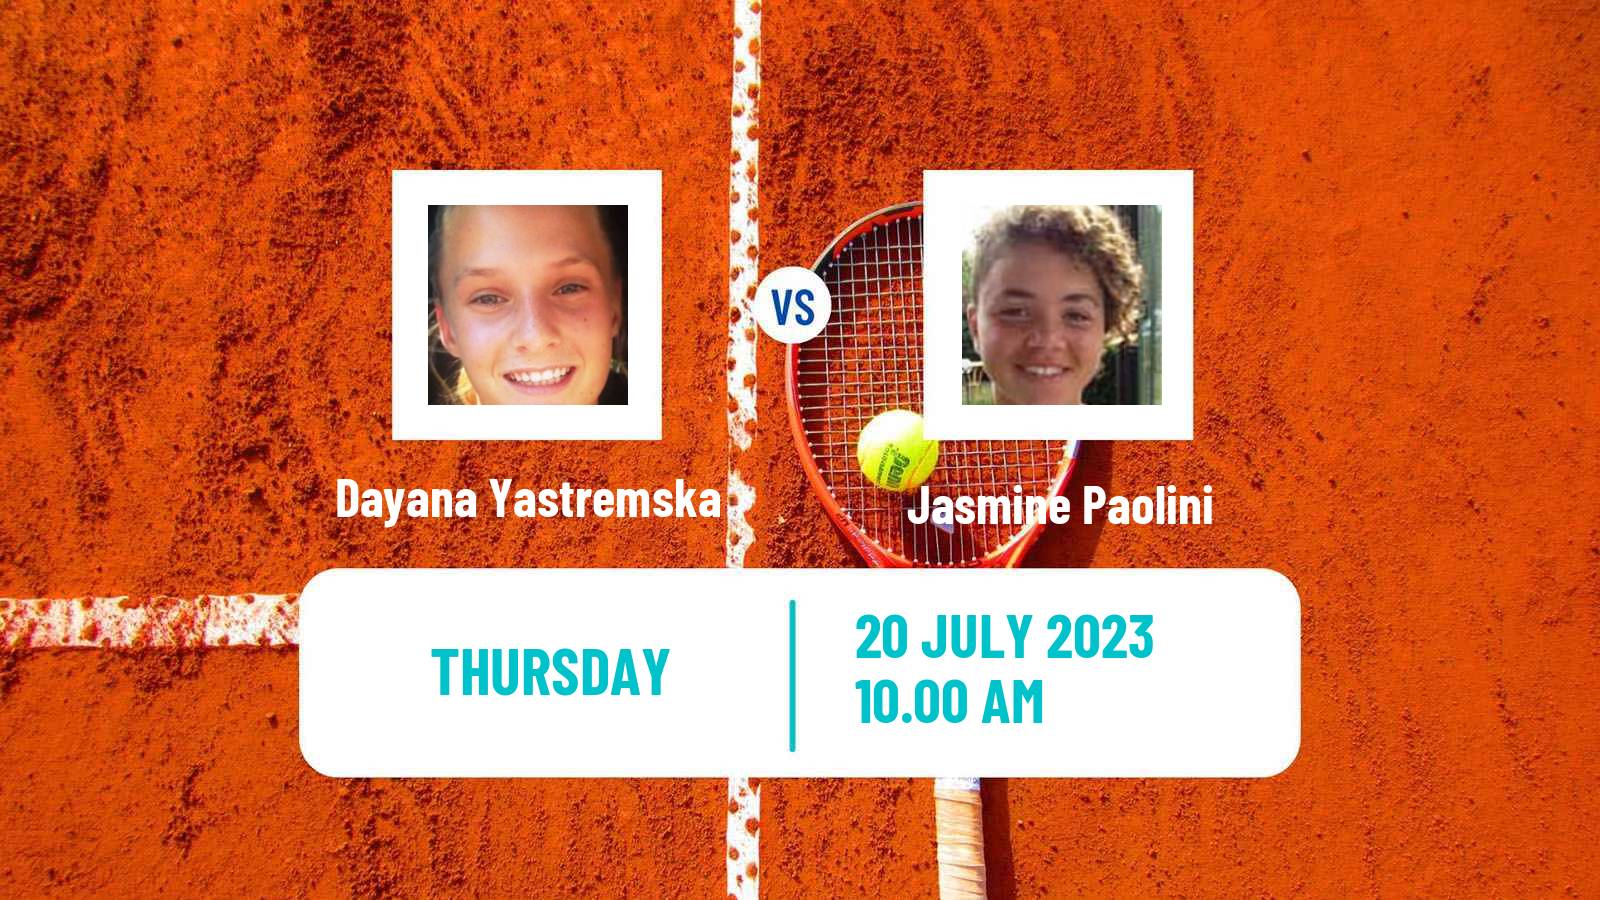 Tennis WTA Palermo Dayana Yastremska - Jasmine Paolini